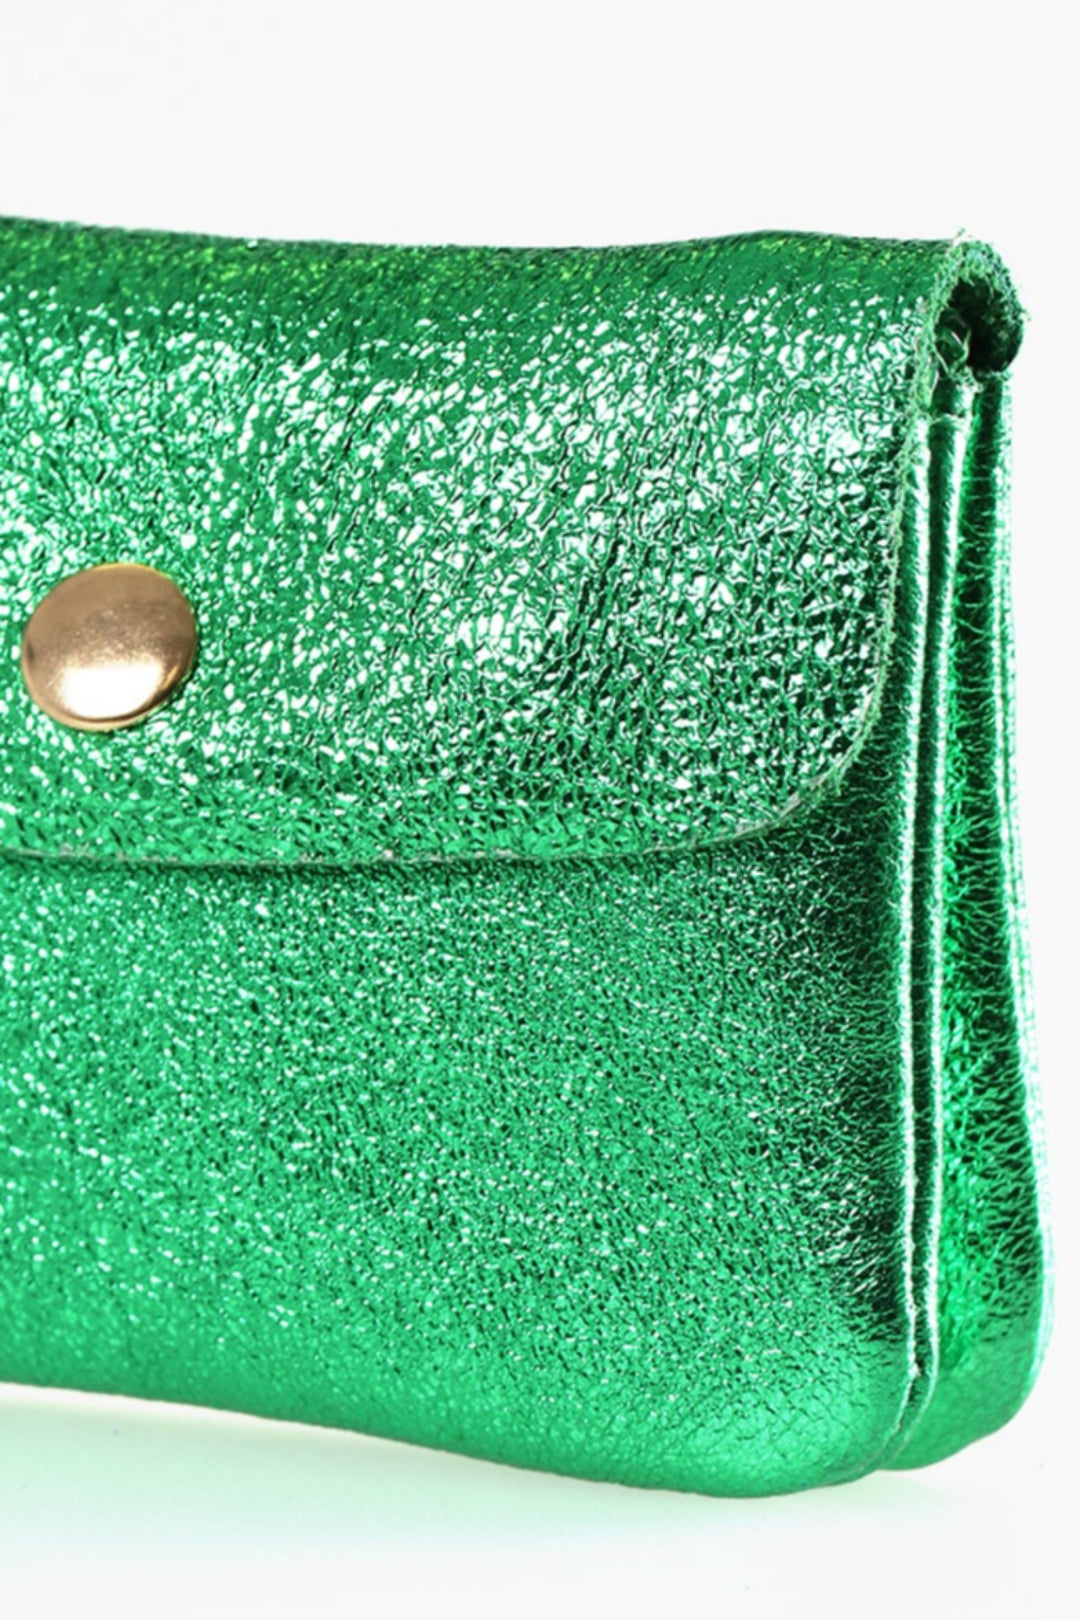 Metallic Green Small Leather Coin Purse